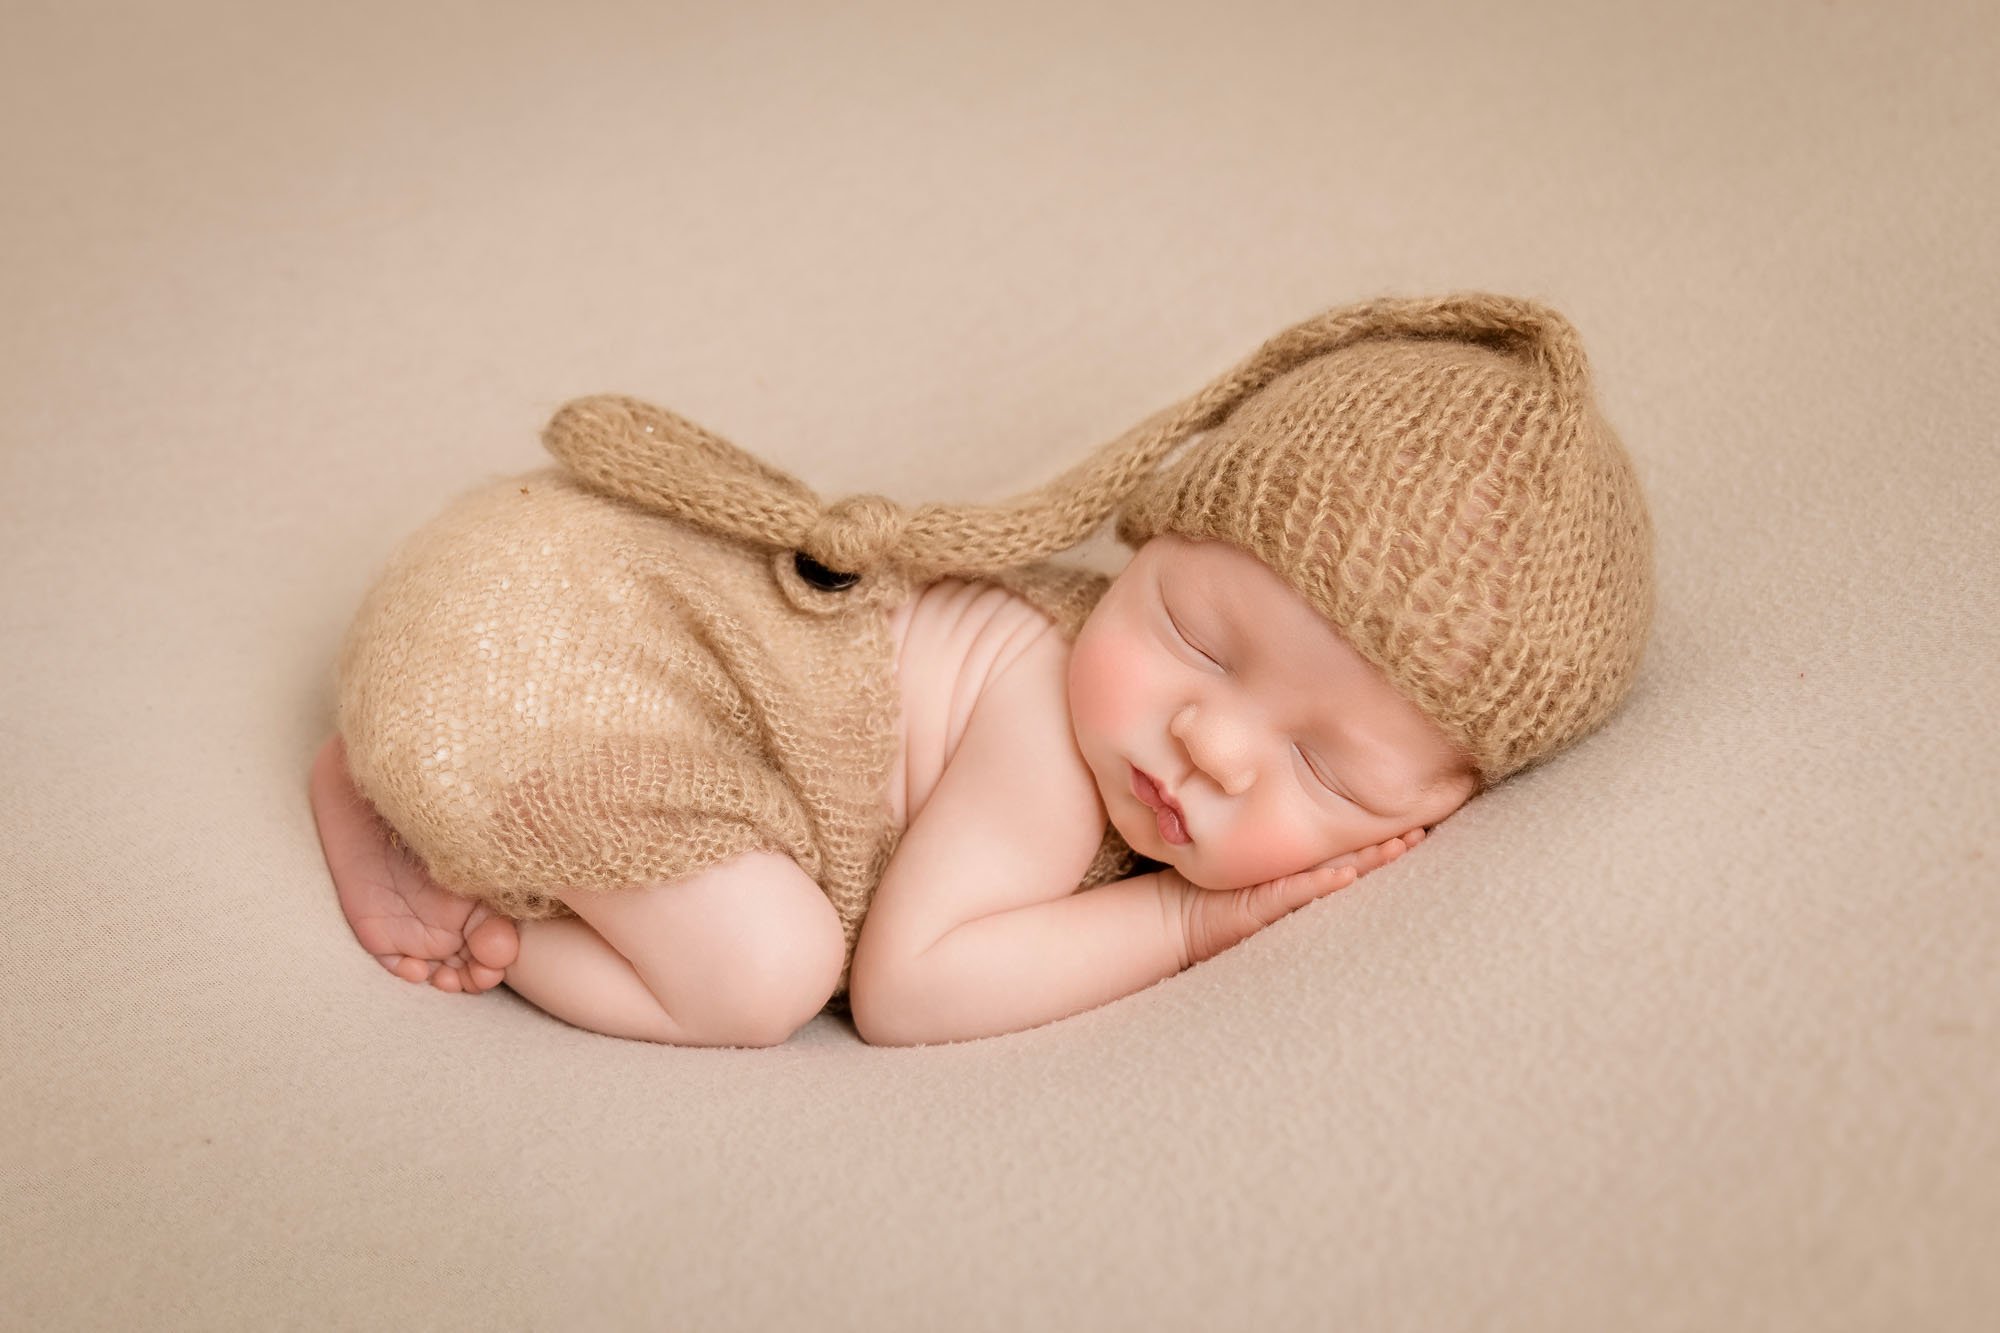 newborn-photography-in-leeds-baby-boy-neutral-cream-bum-up-pose-sleepy-hat.jpg